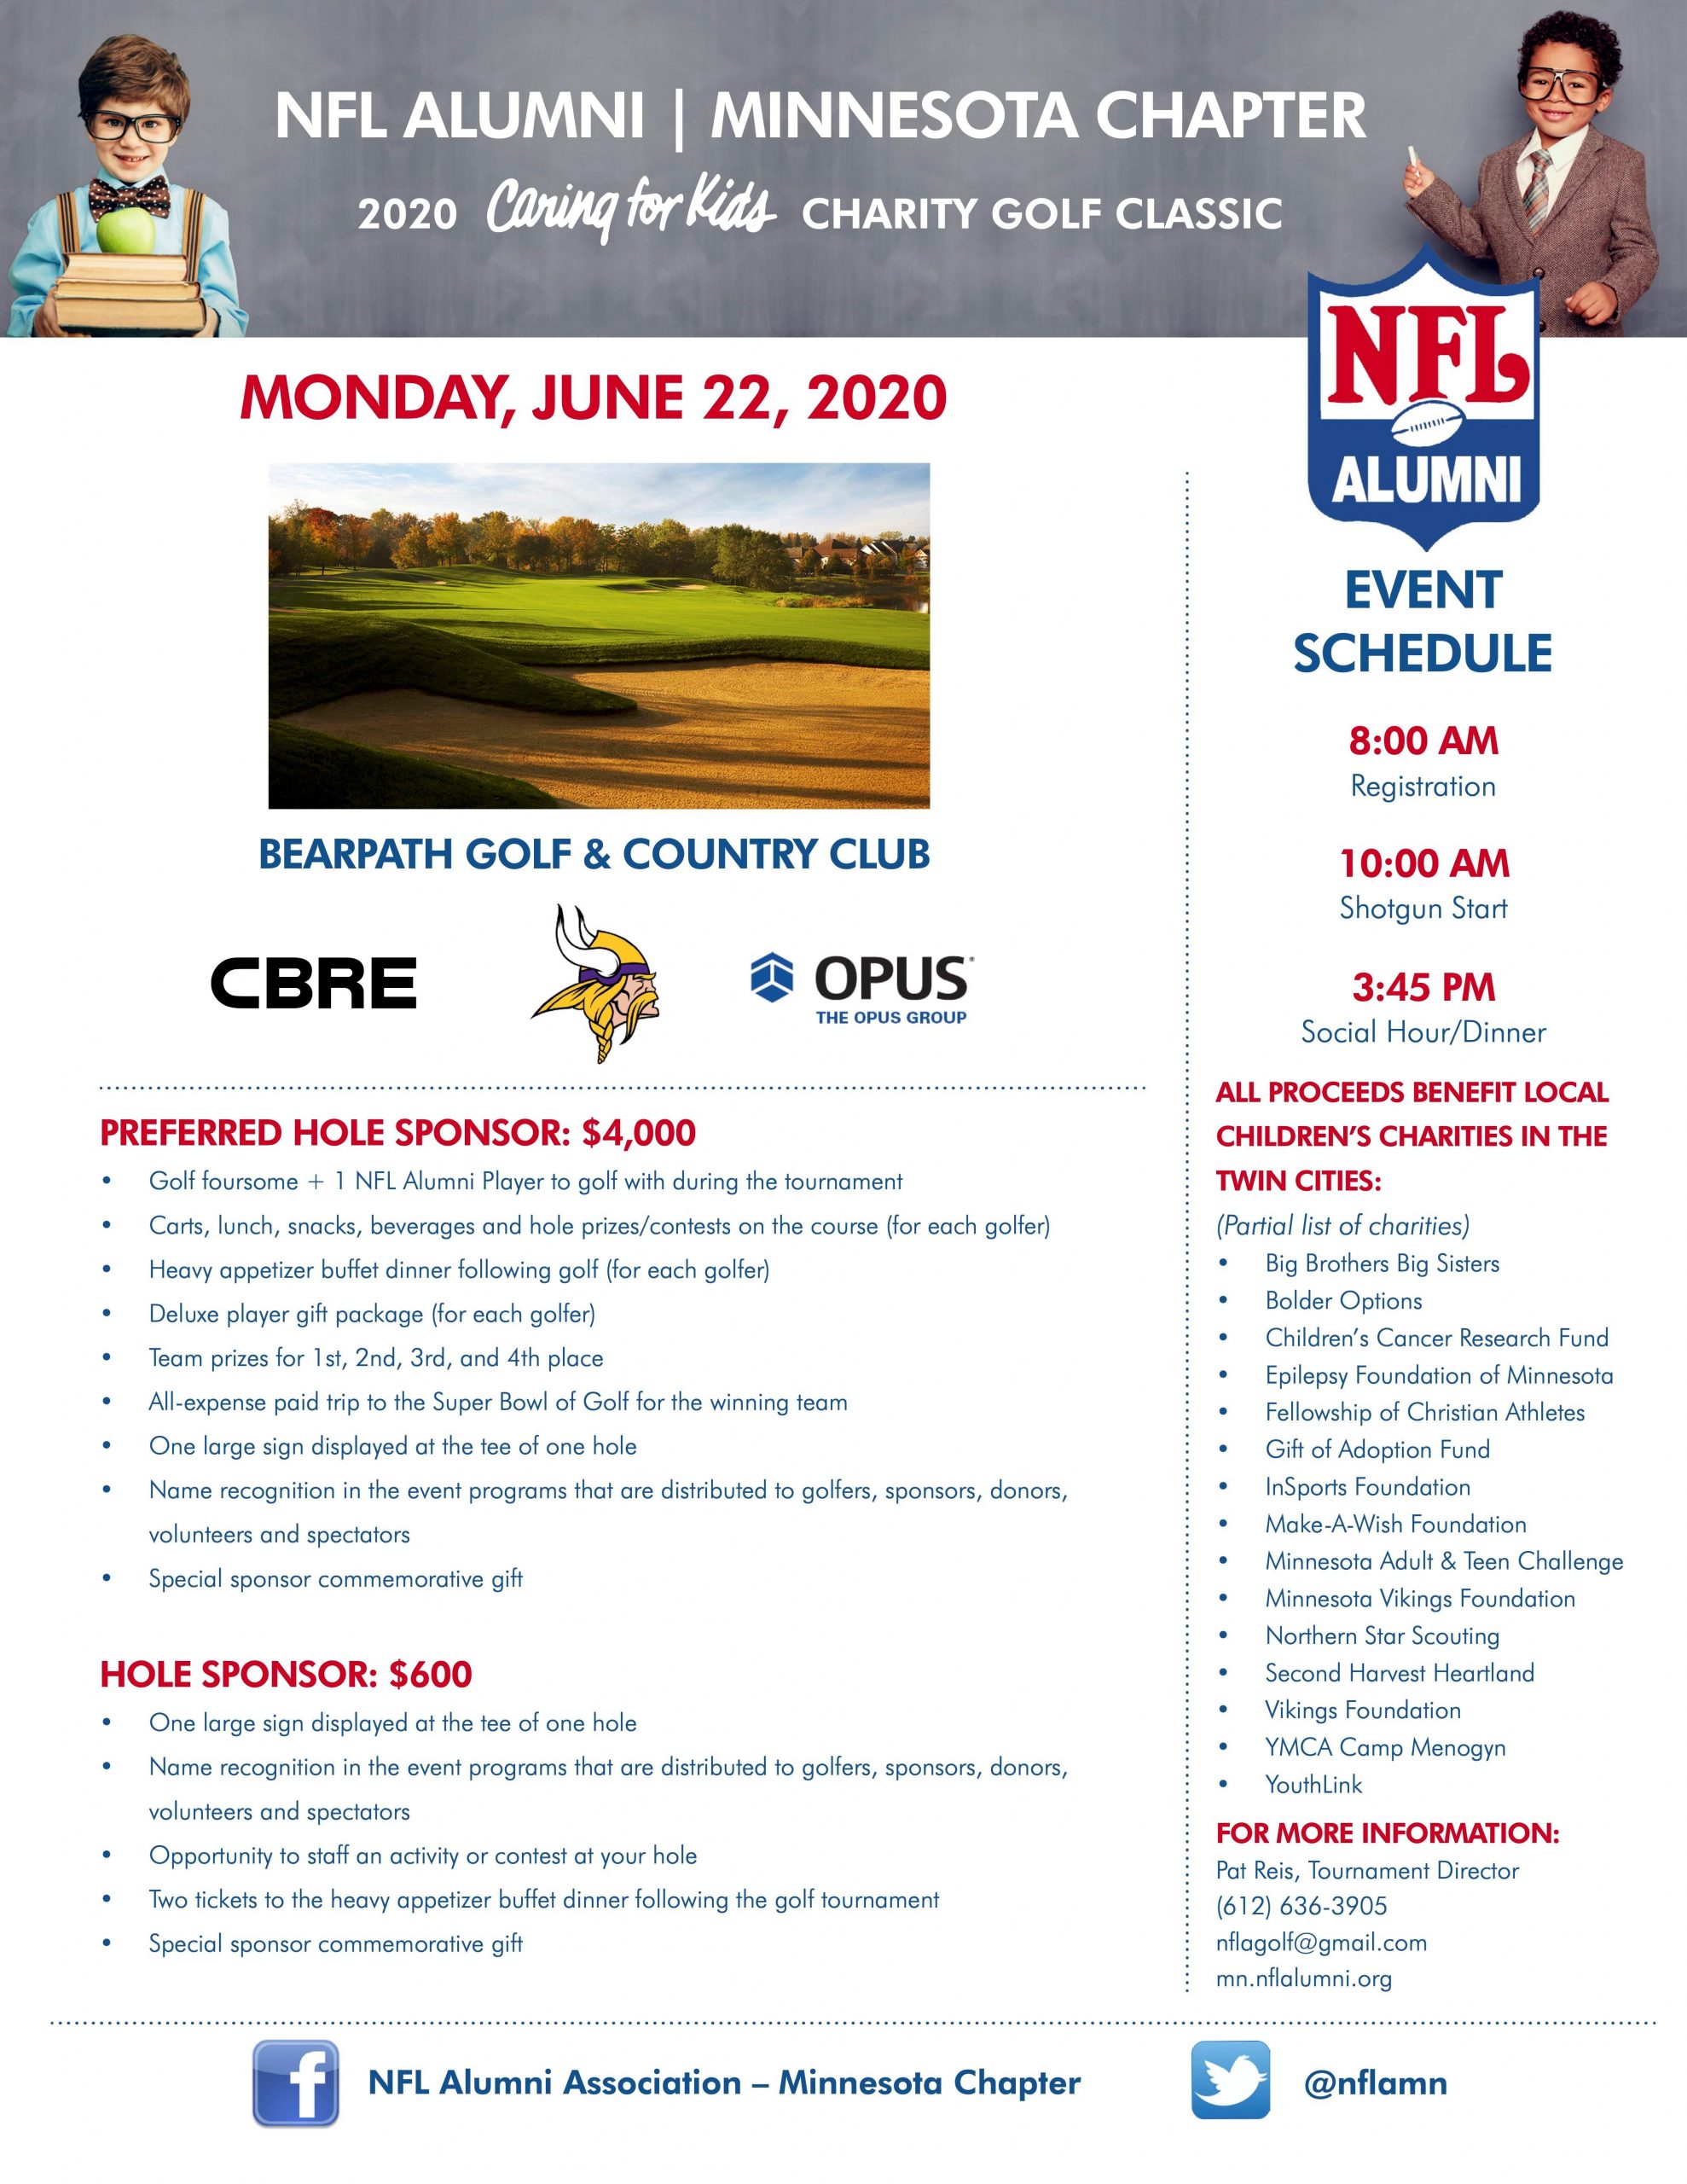 2020 NFL Alumni Minnesota Chapter 'Caring for Kids' Charity Golf Classic